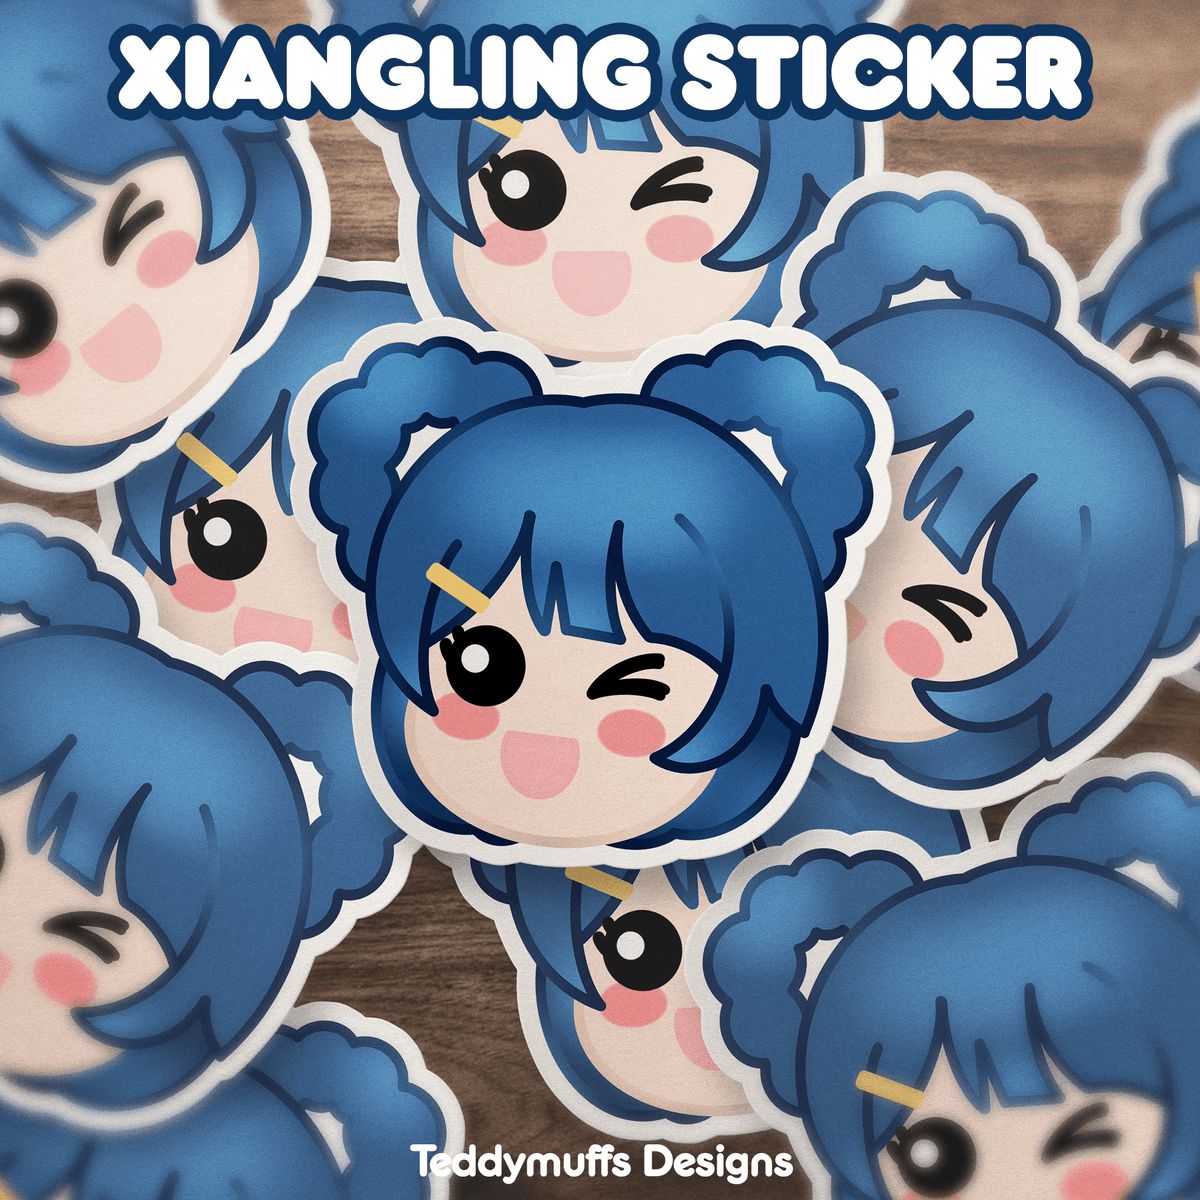 Xiangling Sticker - Teddymuffs Designs